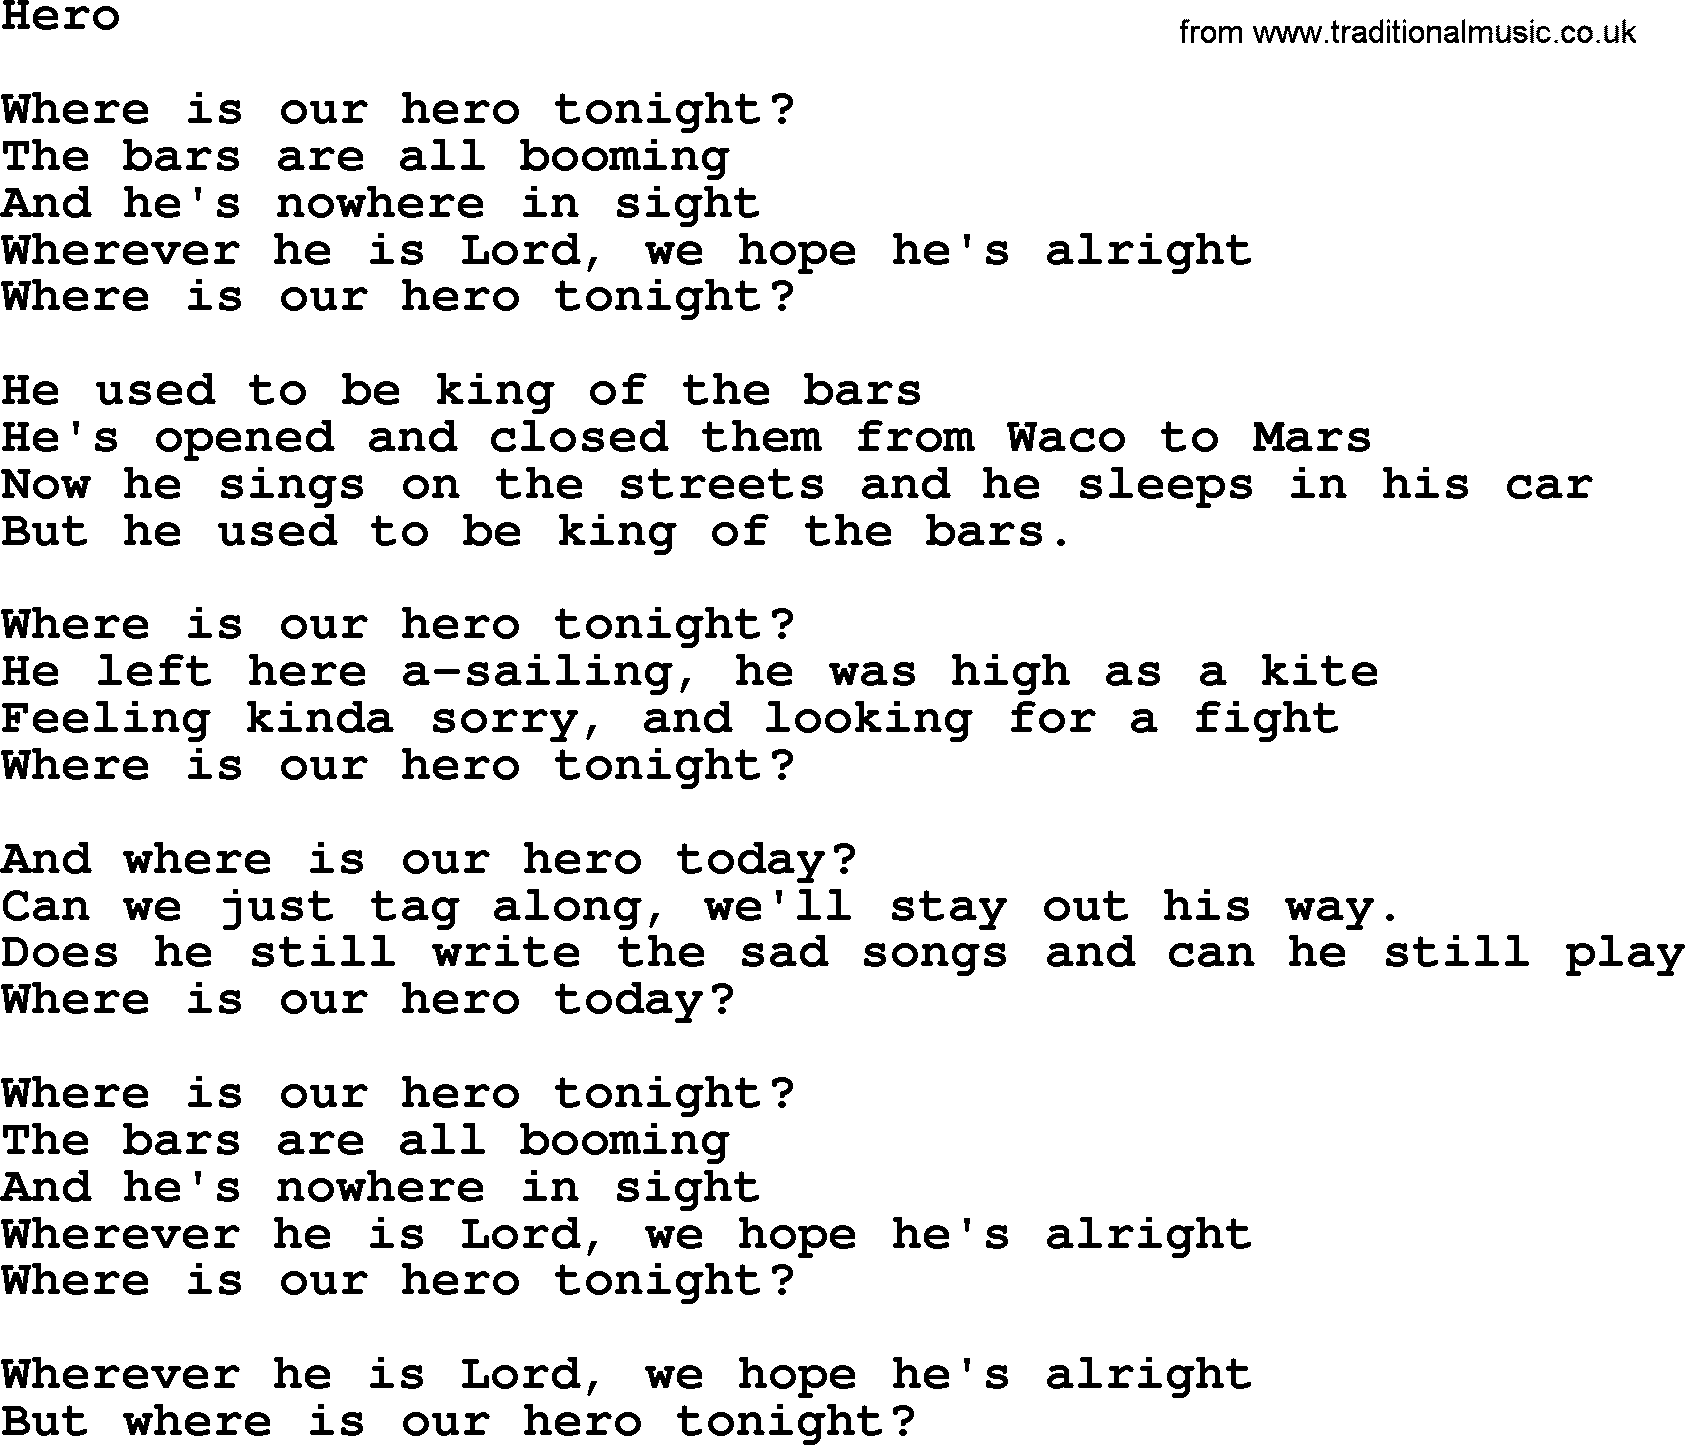 Willie Nelson song: Hero, lyrics